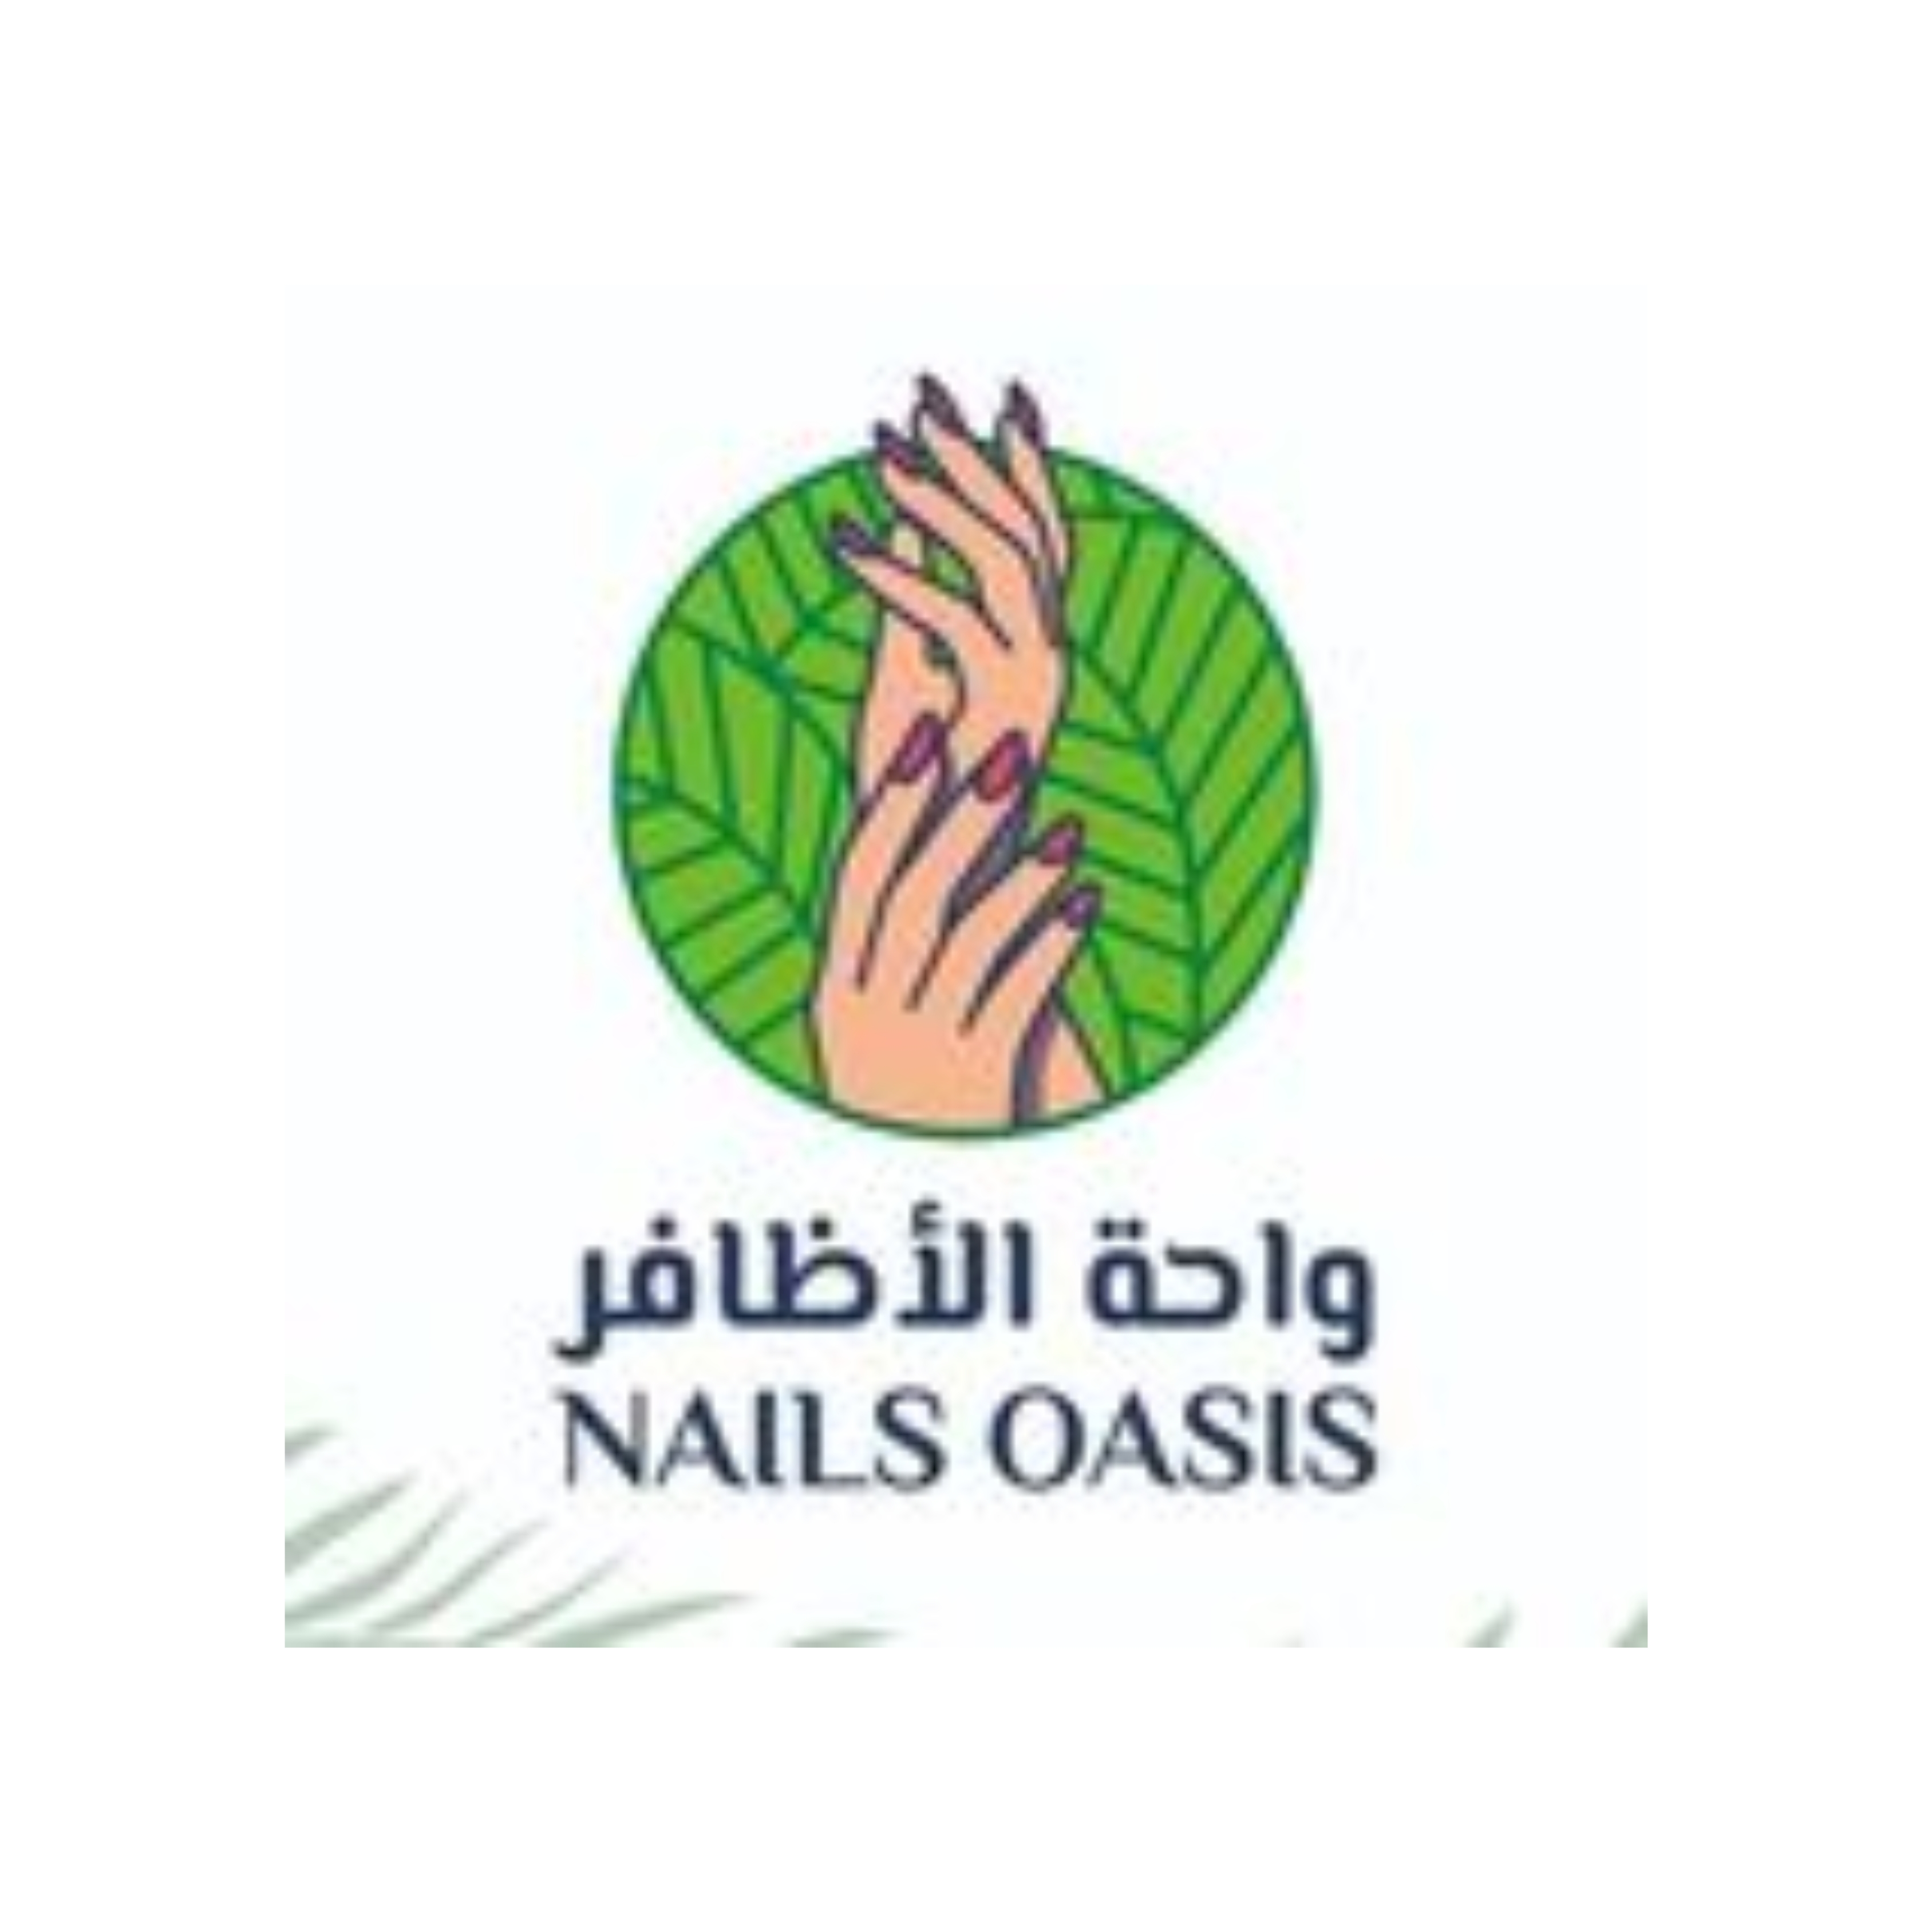 Nails Oasis Salon